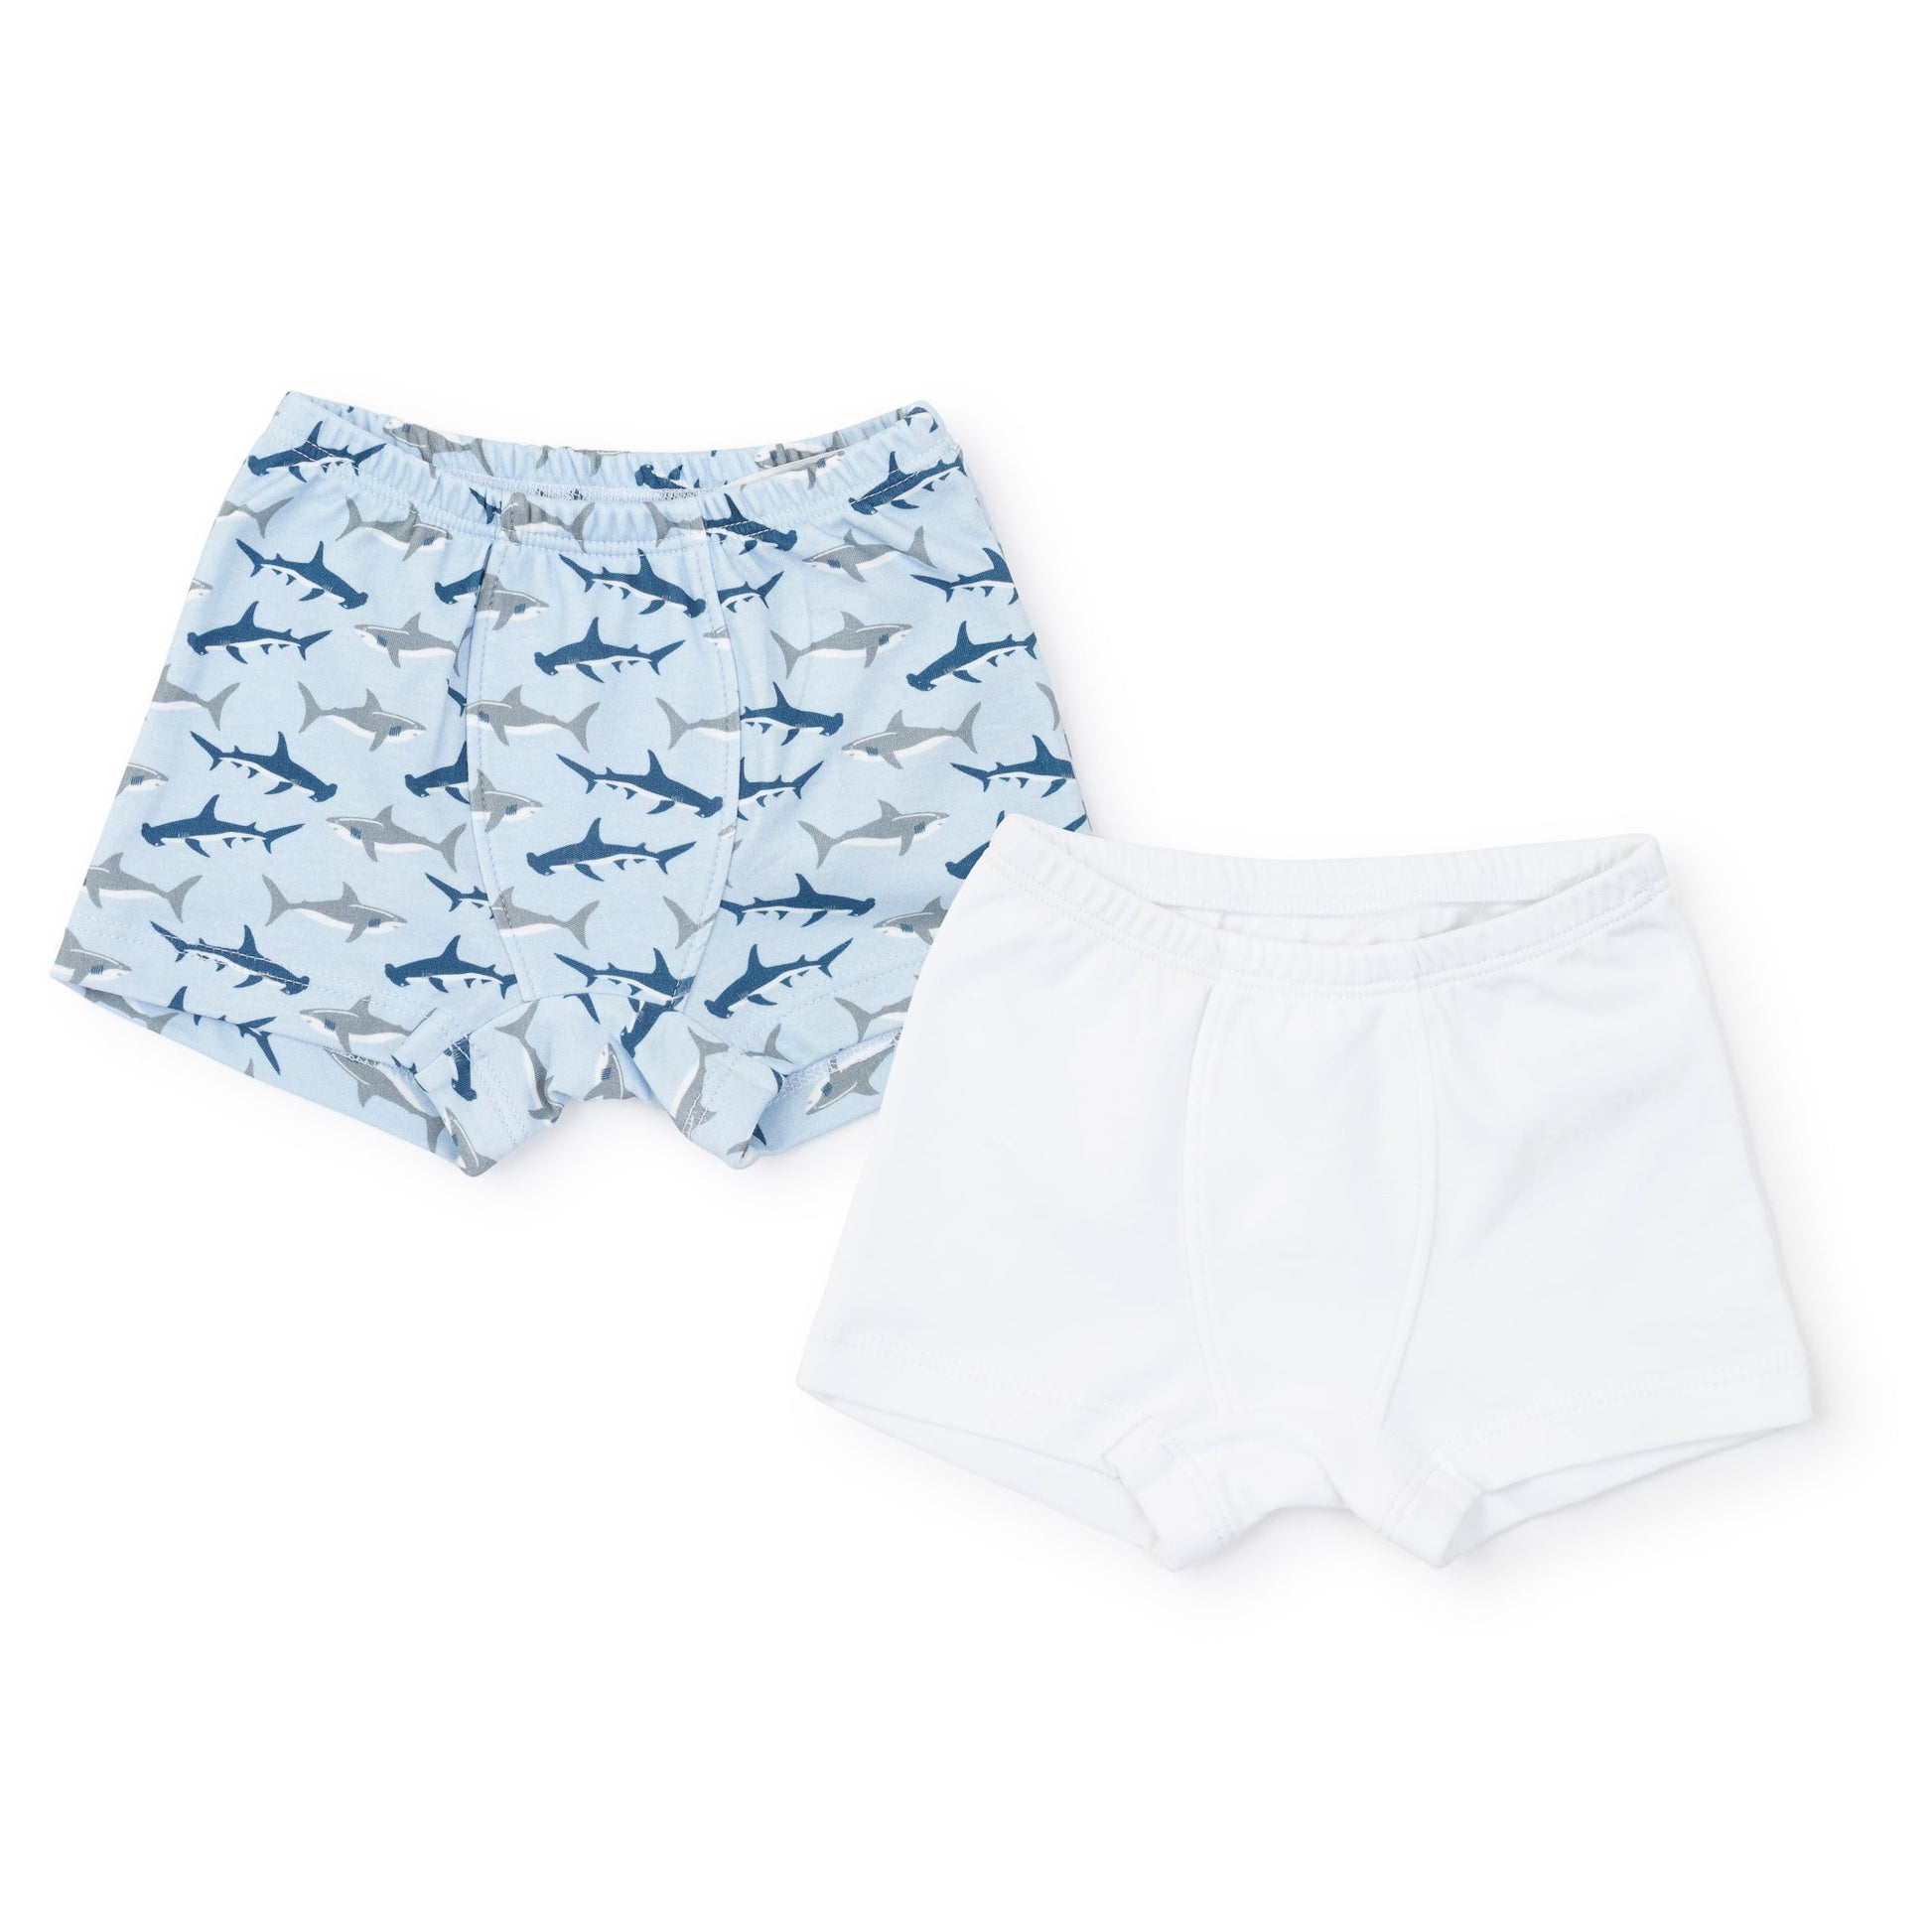 Lila and Hayes James Boys' Pima Cotton Underwear Set - Swimming